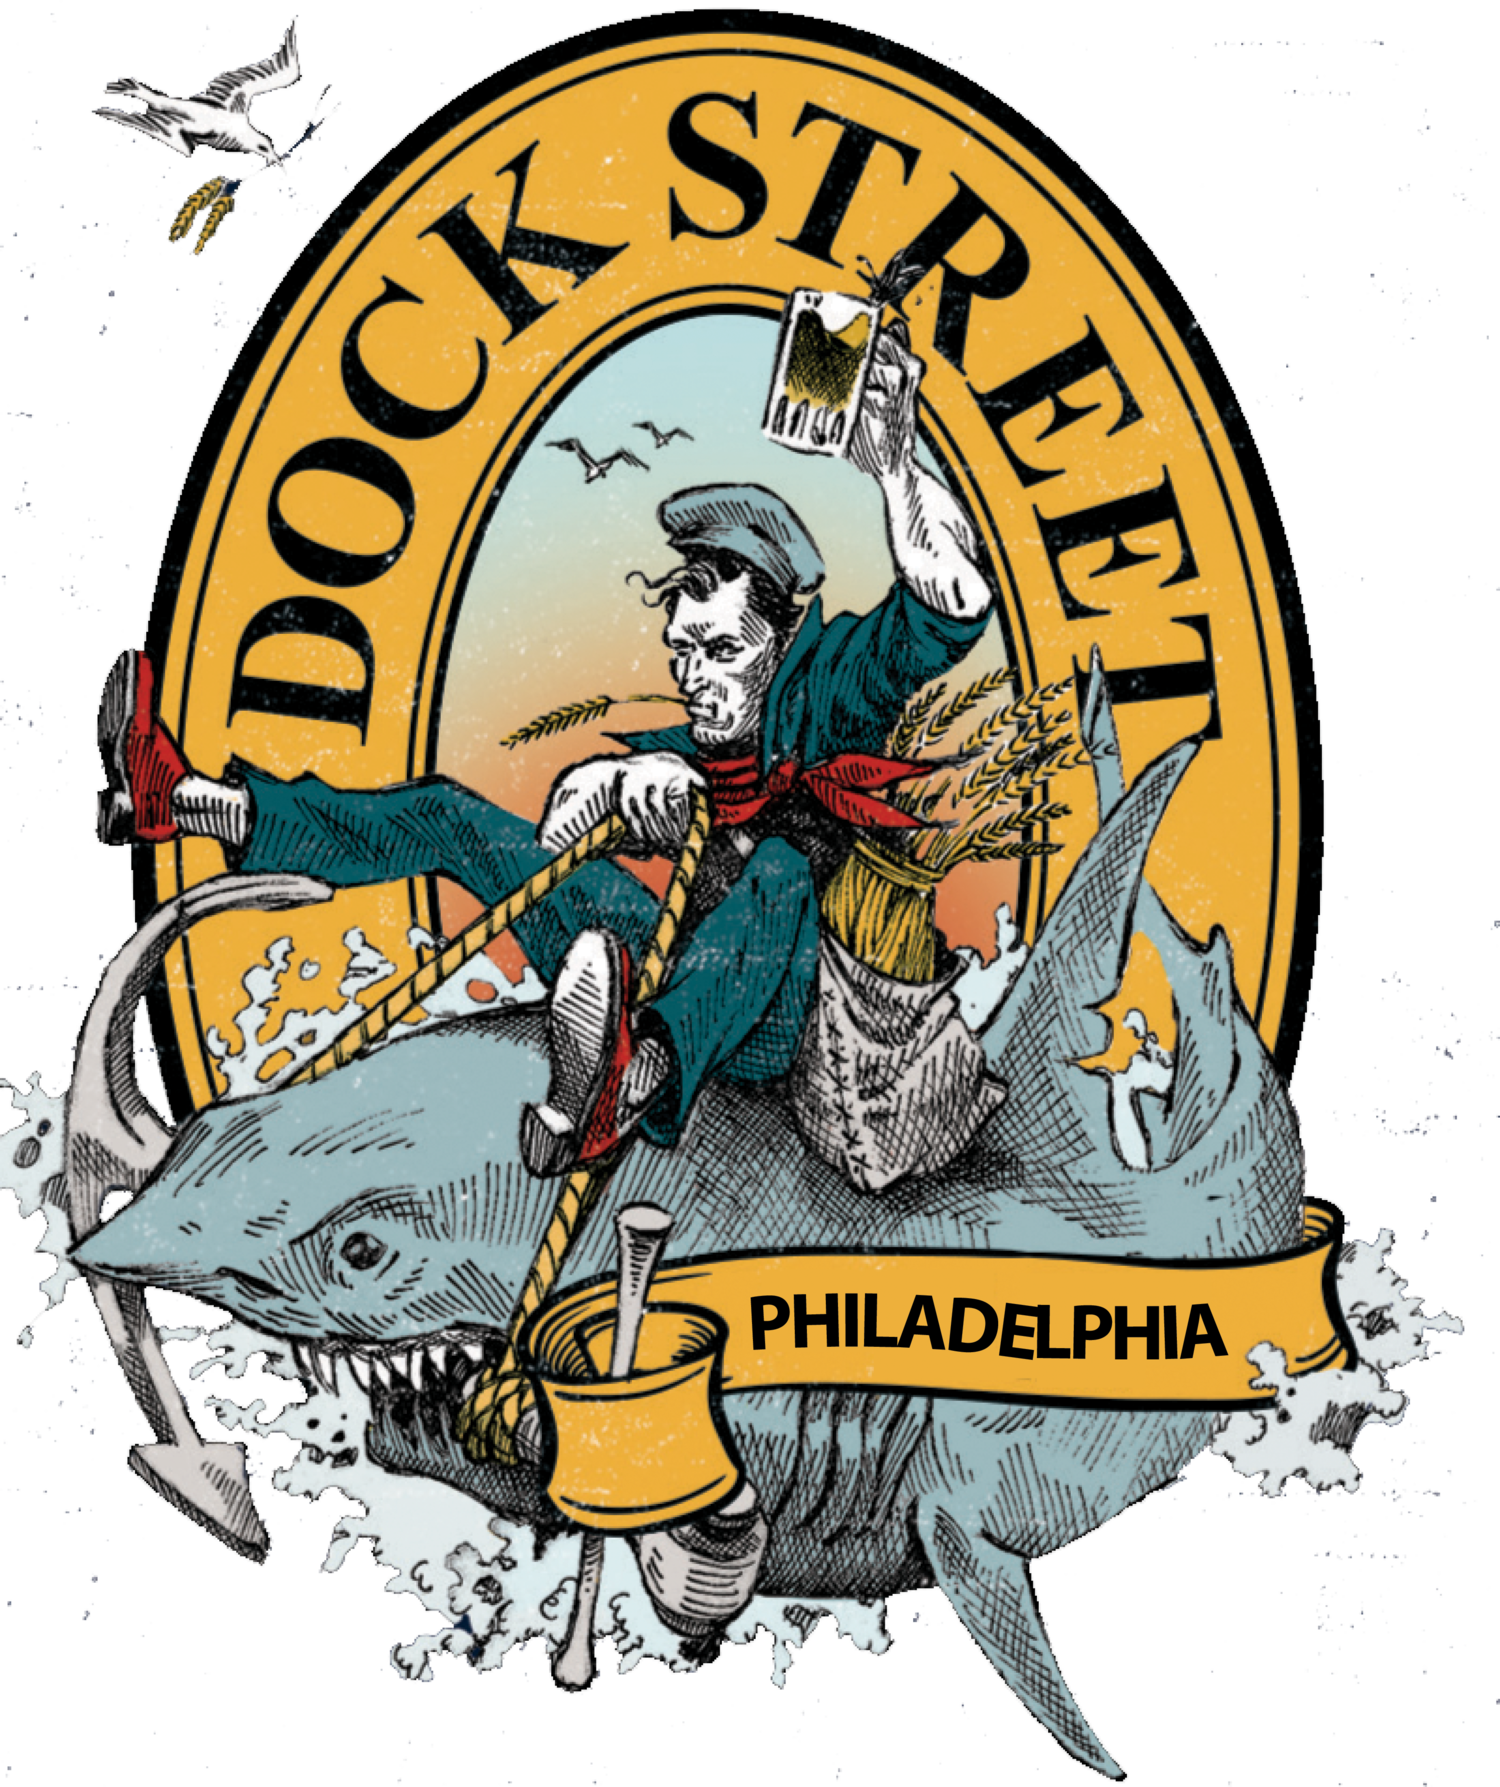 Logo of Dock Street Brewery brewery